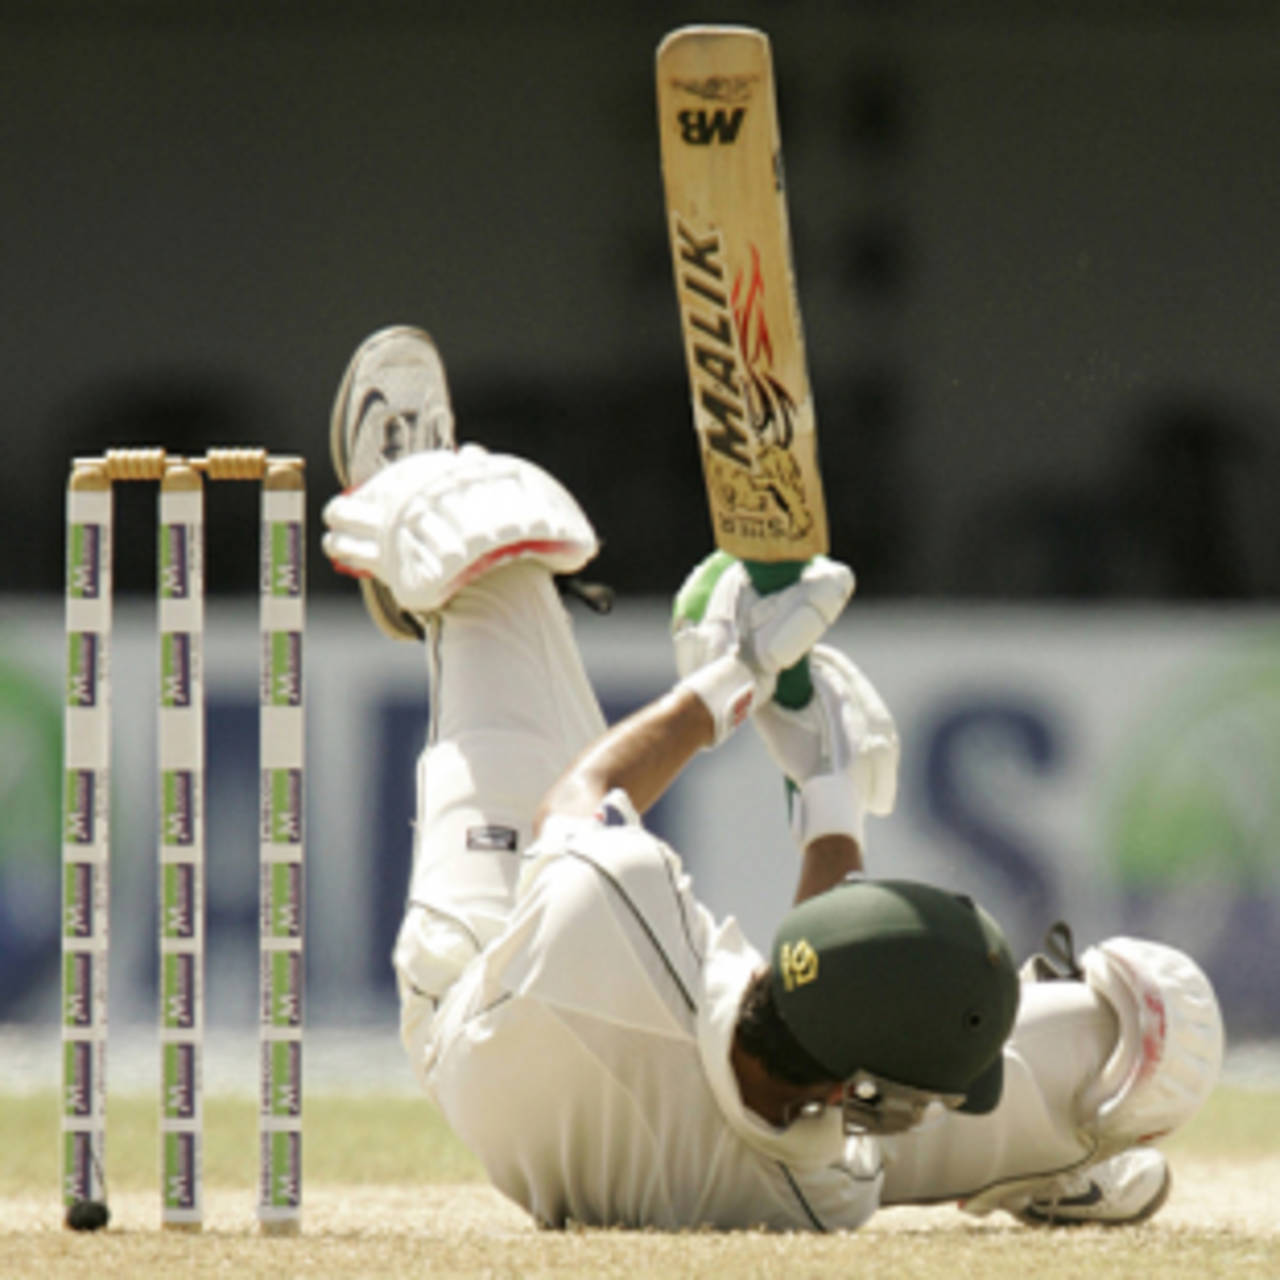 A Thilan Thushara bouncer has Fawad Alam struggling, Sri Lanka v Pakistan, 2nd Test, Colombo, 2nd day, July 13, 2009